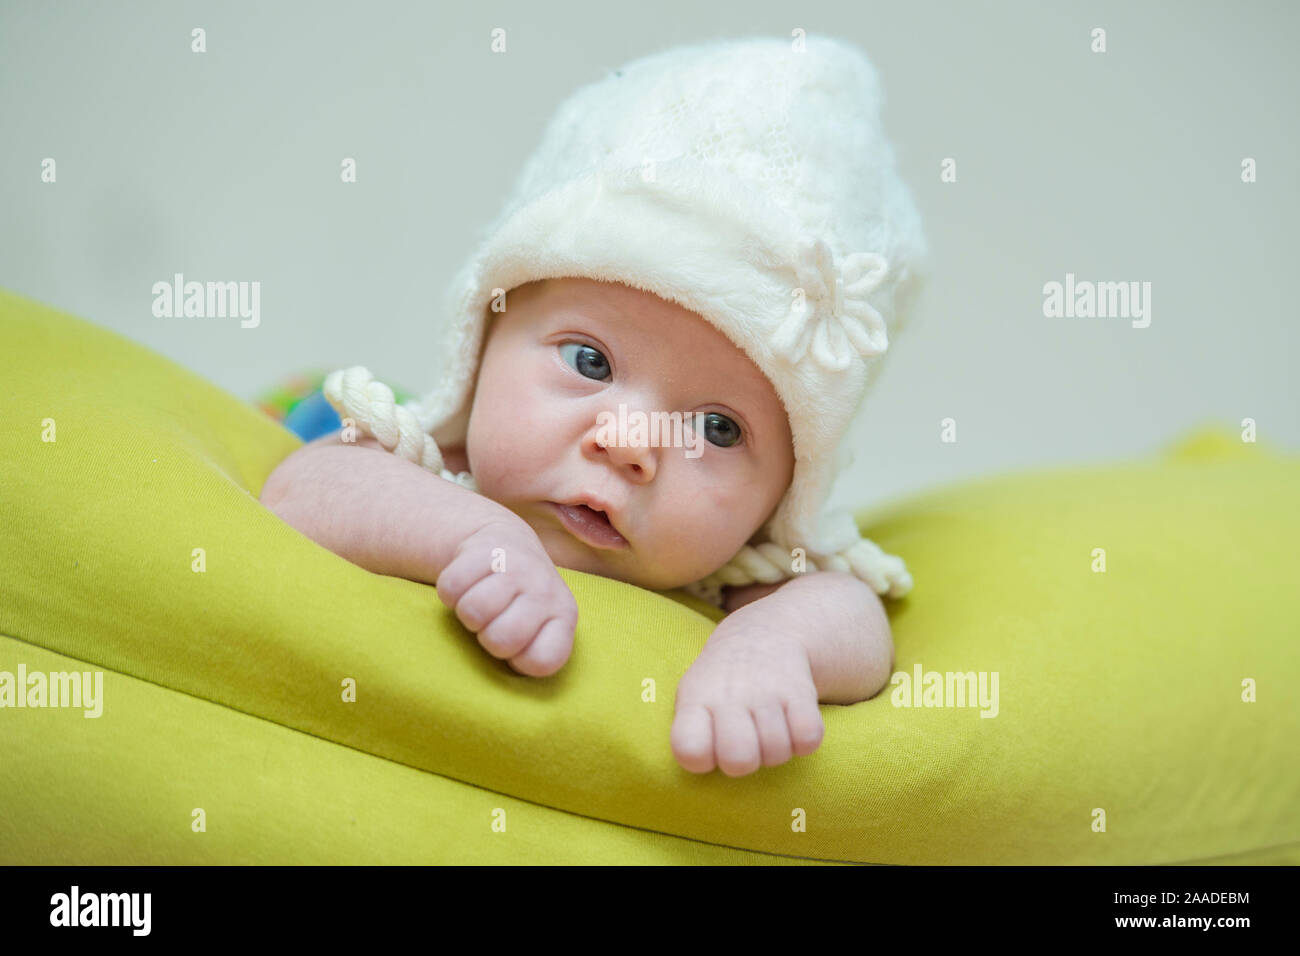 Baby mit Haube - baby Stock Photo